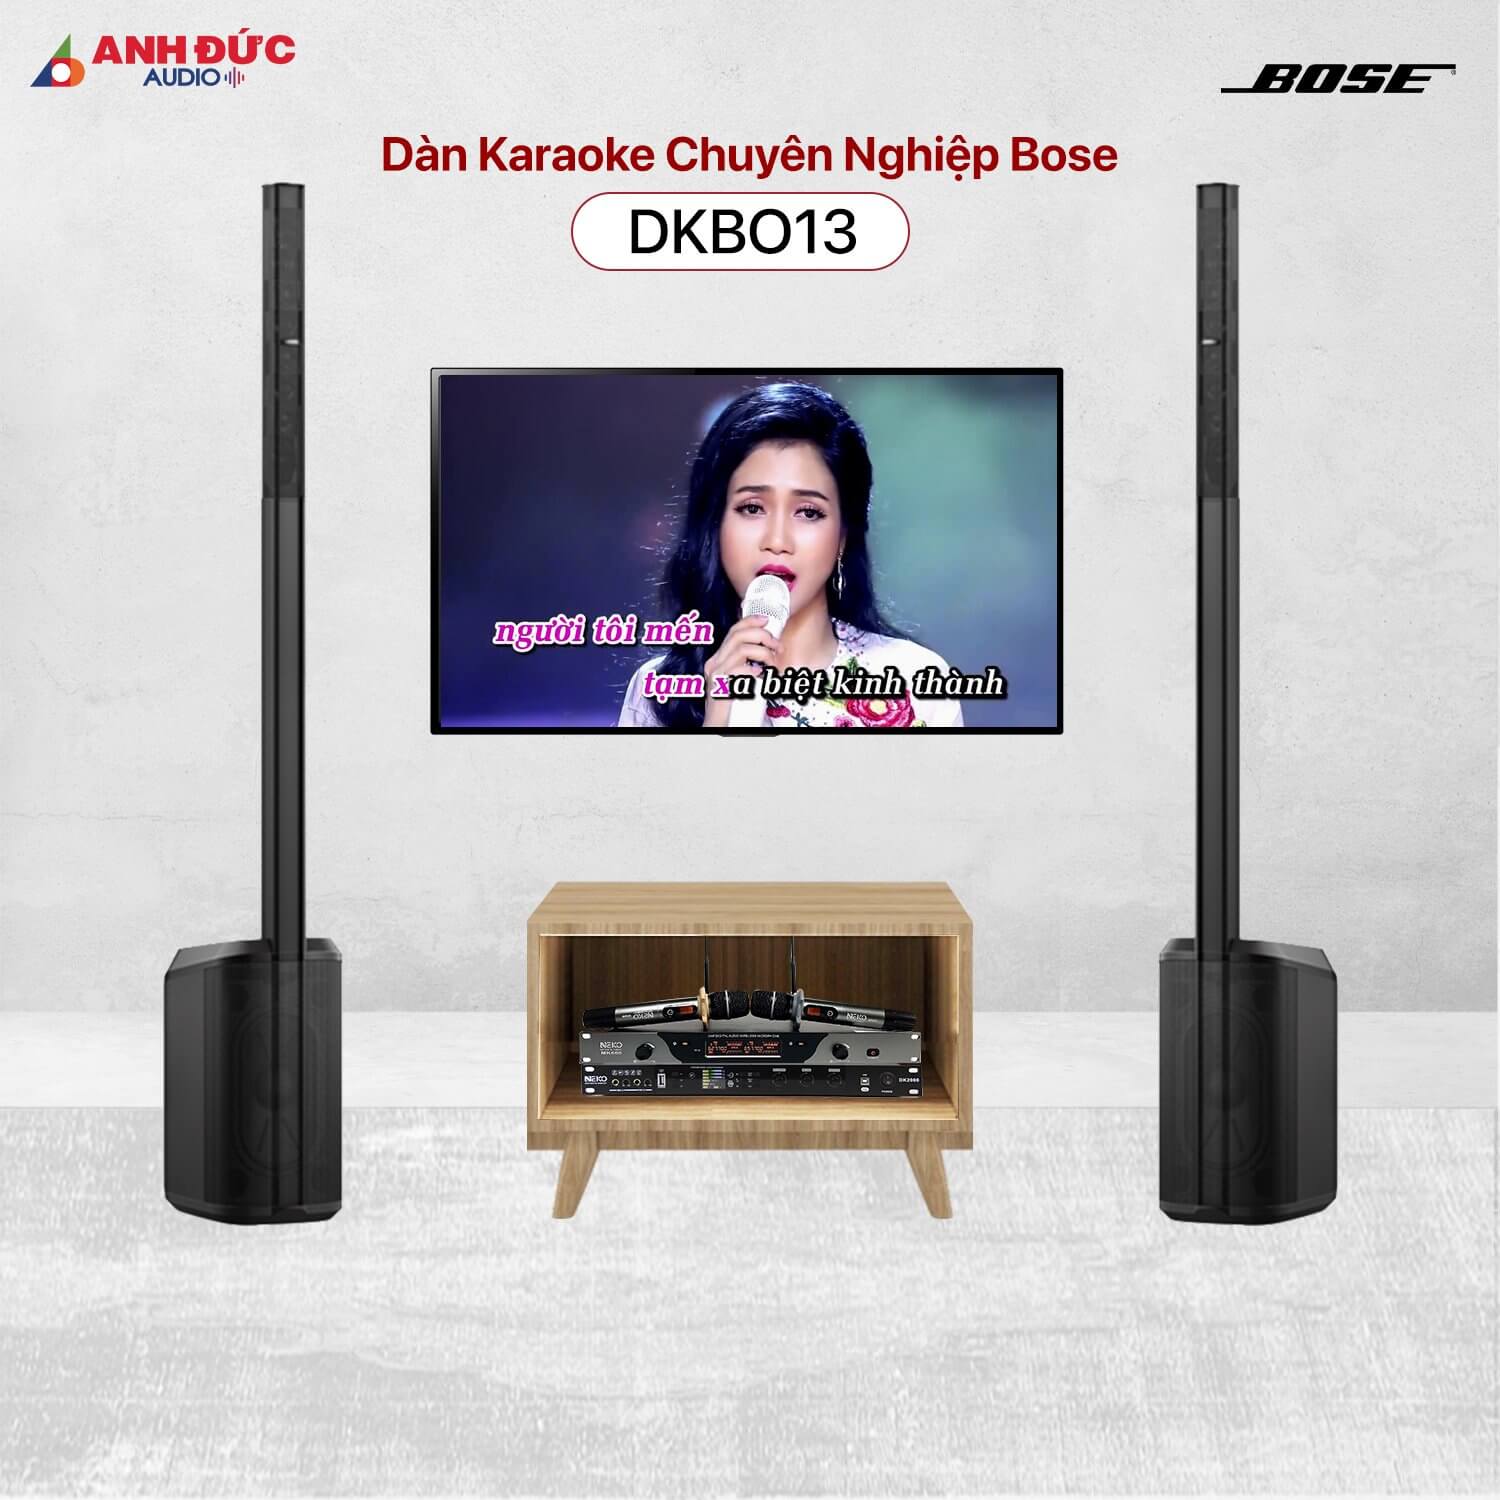 Dàn Karaoke Chuyên Nghiệp Bose DKBO13